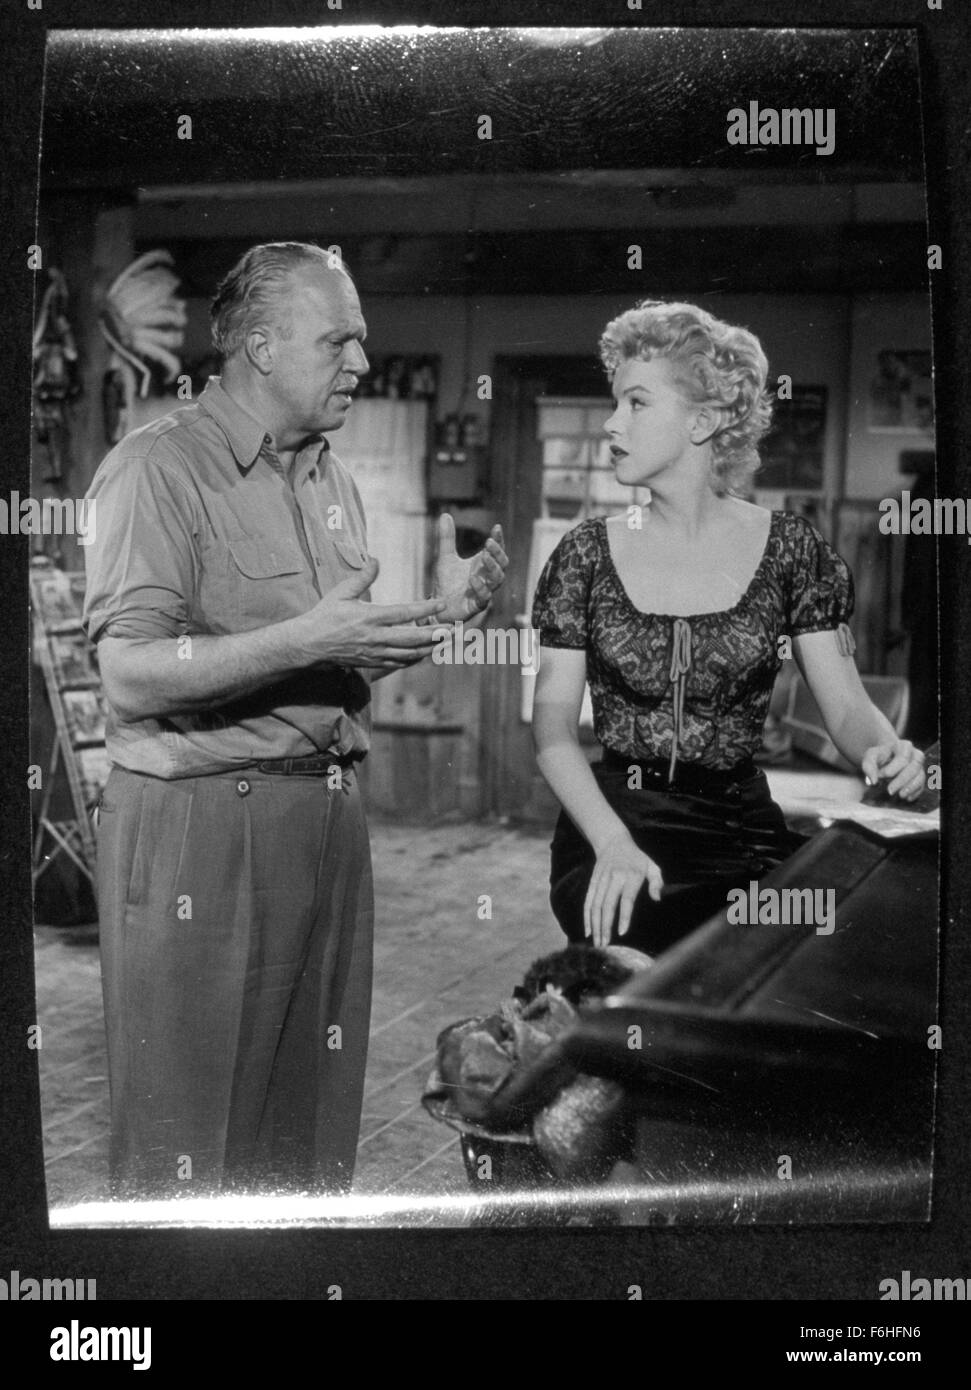 1956, Film Title: BUS STOP, Director: JOSHUA LOGAN, Studio: FOX, Pictured: JOSHUA LOGAN, MARILYN MONROE, MOVIE SET, DIRECTOR DIRECTS, LECTURING. (Credit Image: SNAP) Stock Photo